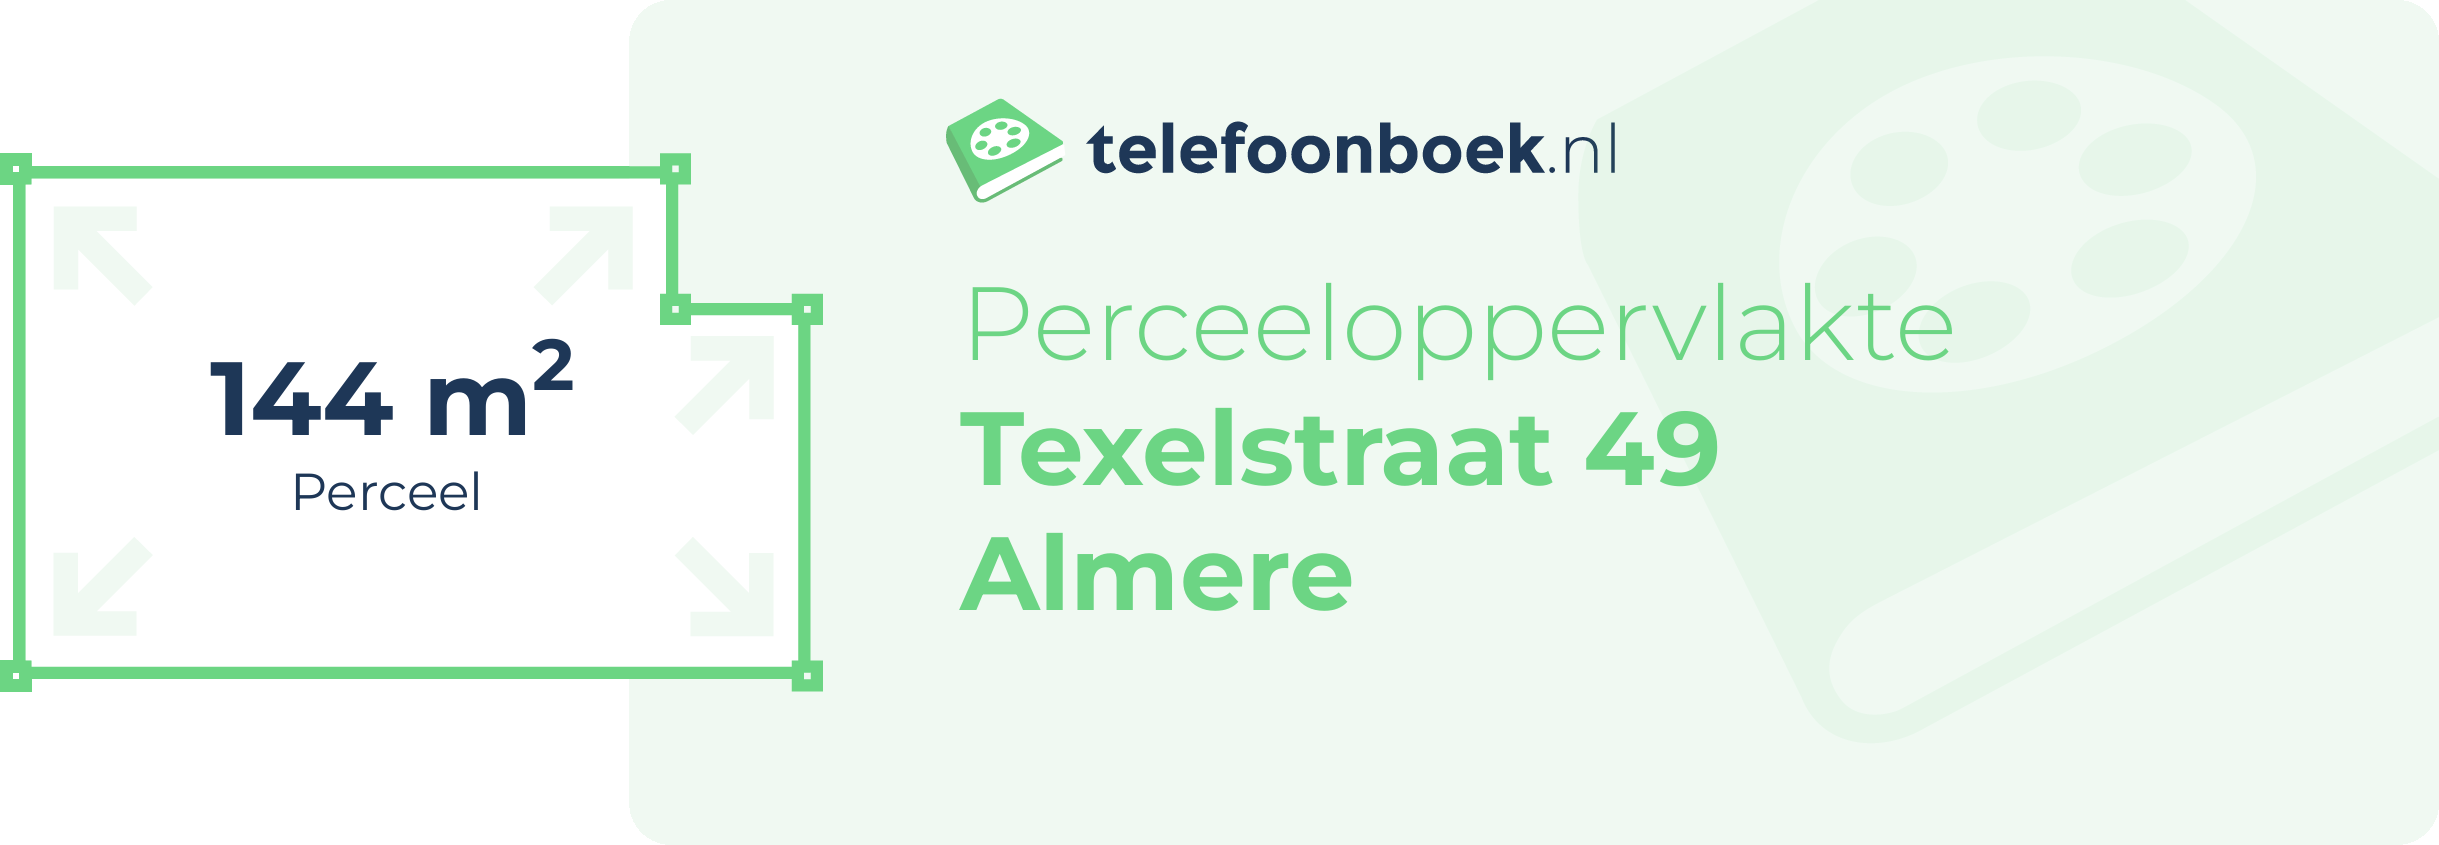 Perceeloppervlakte Texelstraat 49 Almere